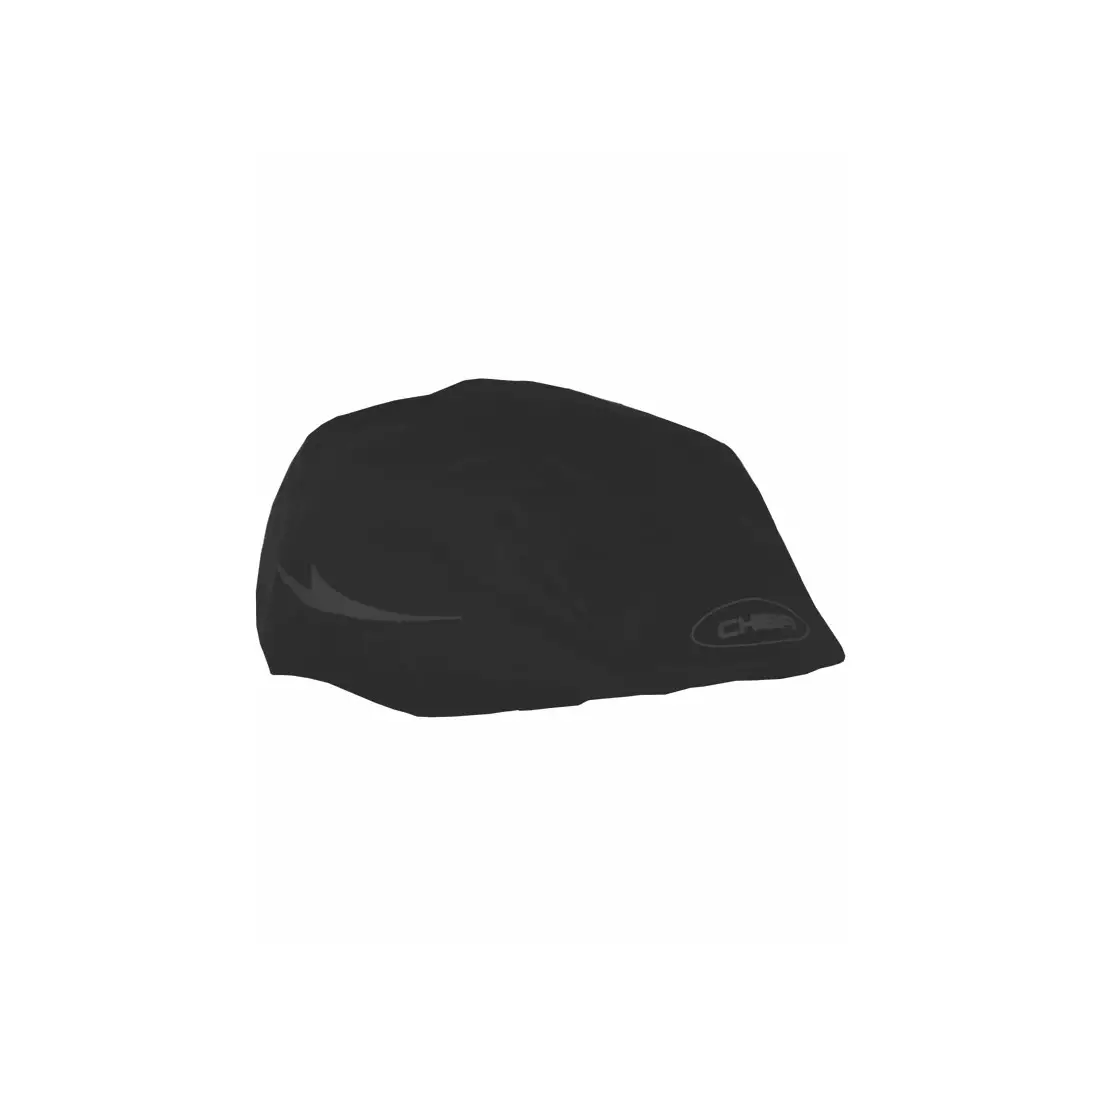 CHIBA SS19 RAINCOVER PRO 31423 helmet rain protector black one size